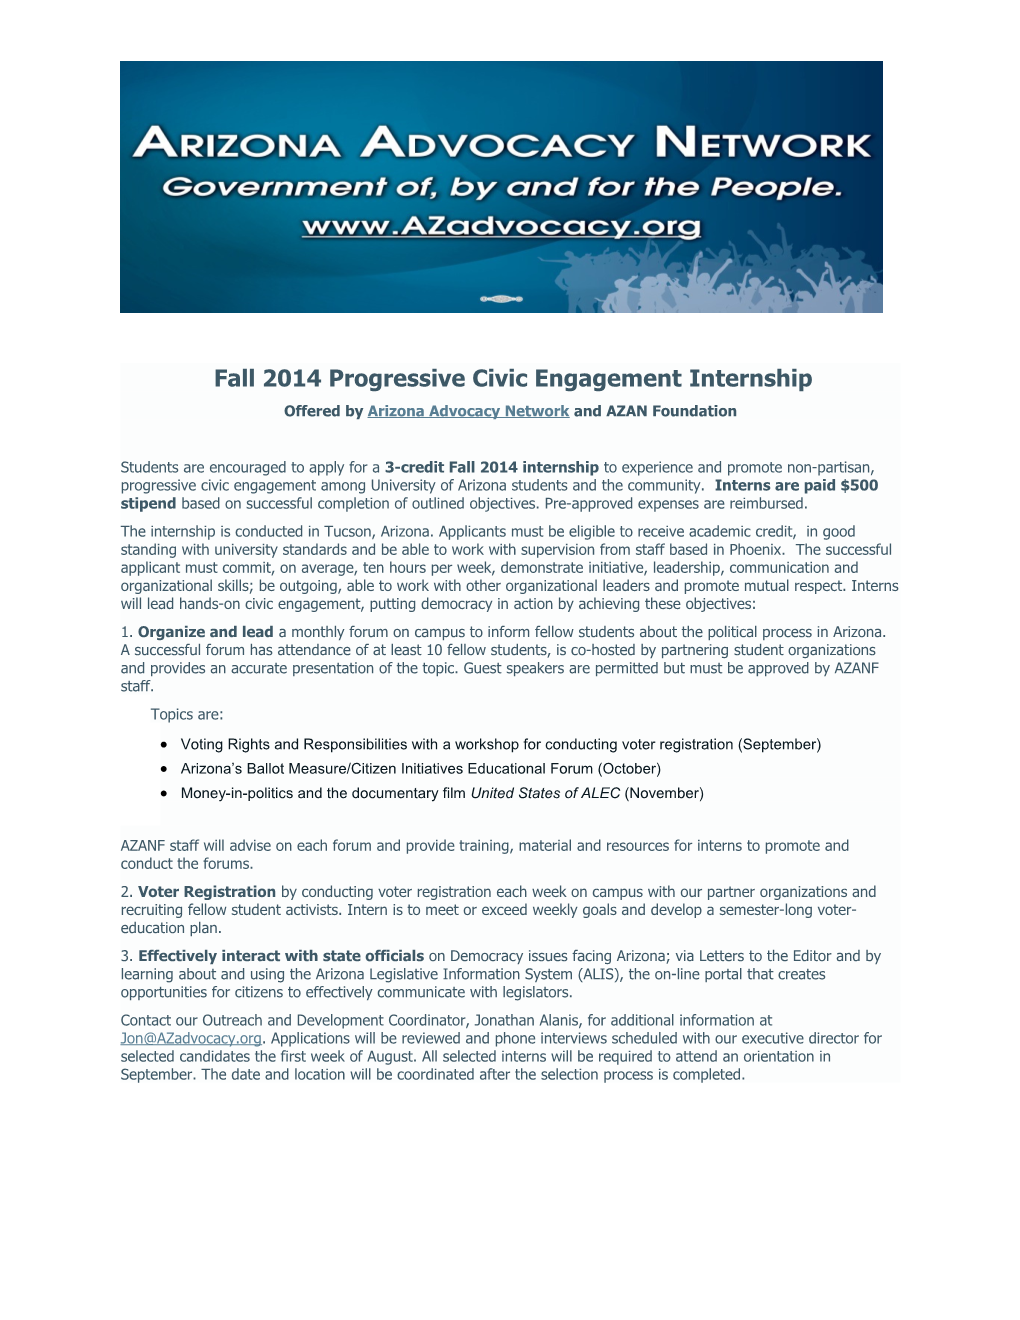 Fall 2014 Progressive Civic Engagementinternship